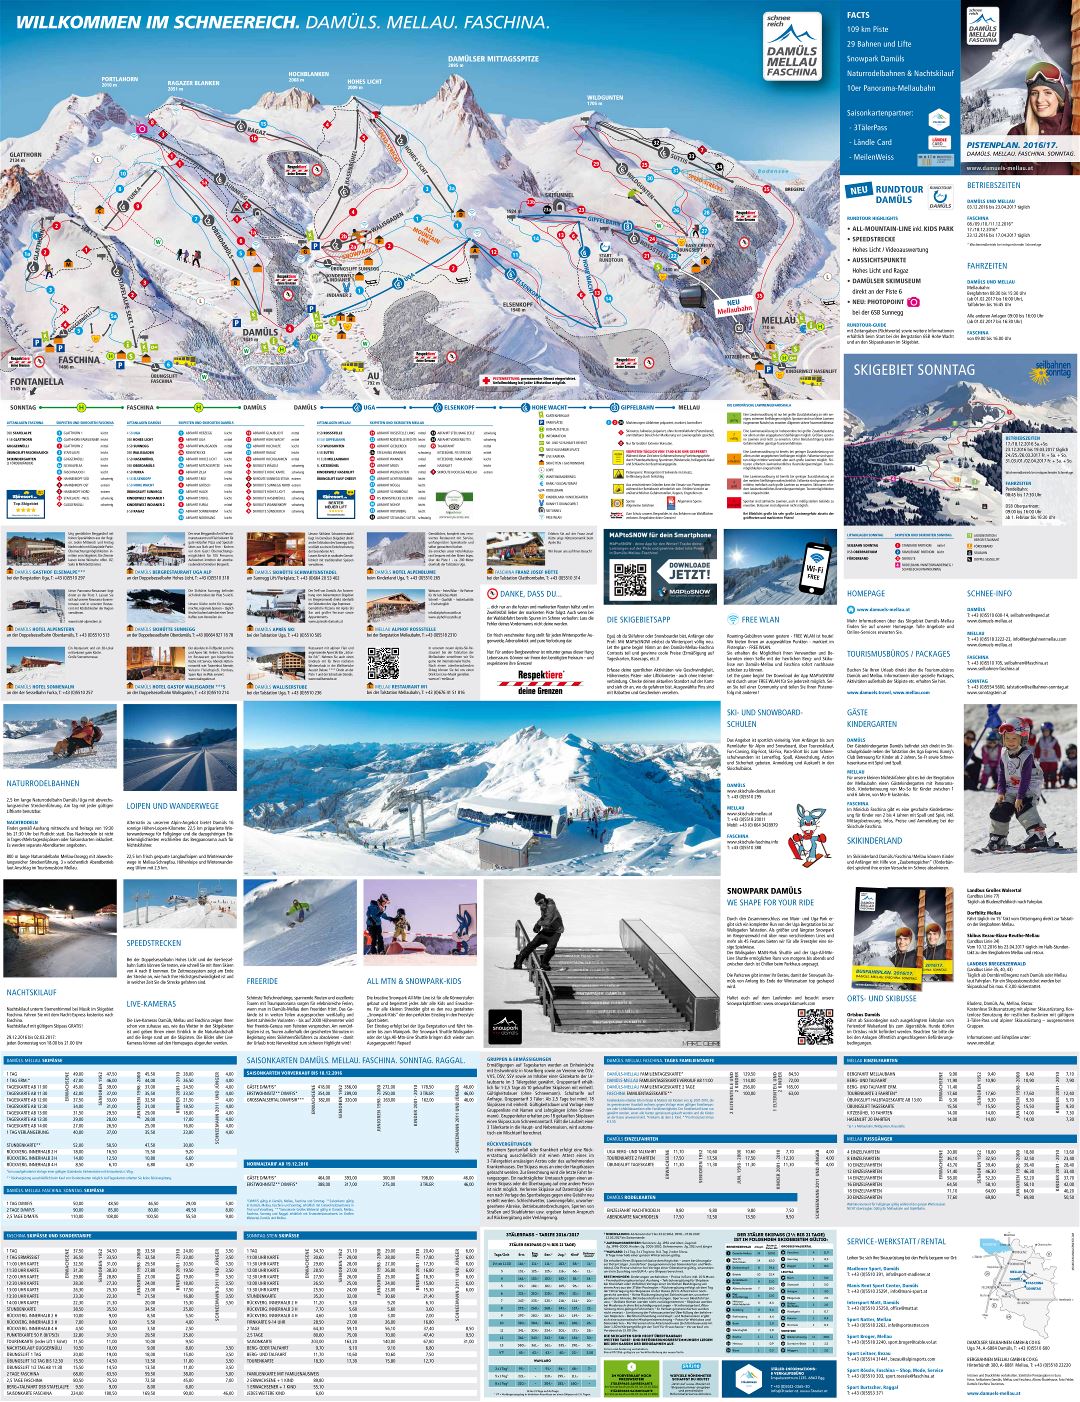 Large scale Damuels-Mellau and Faschina Ski Resort guide - 2016